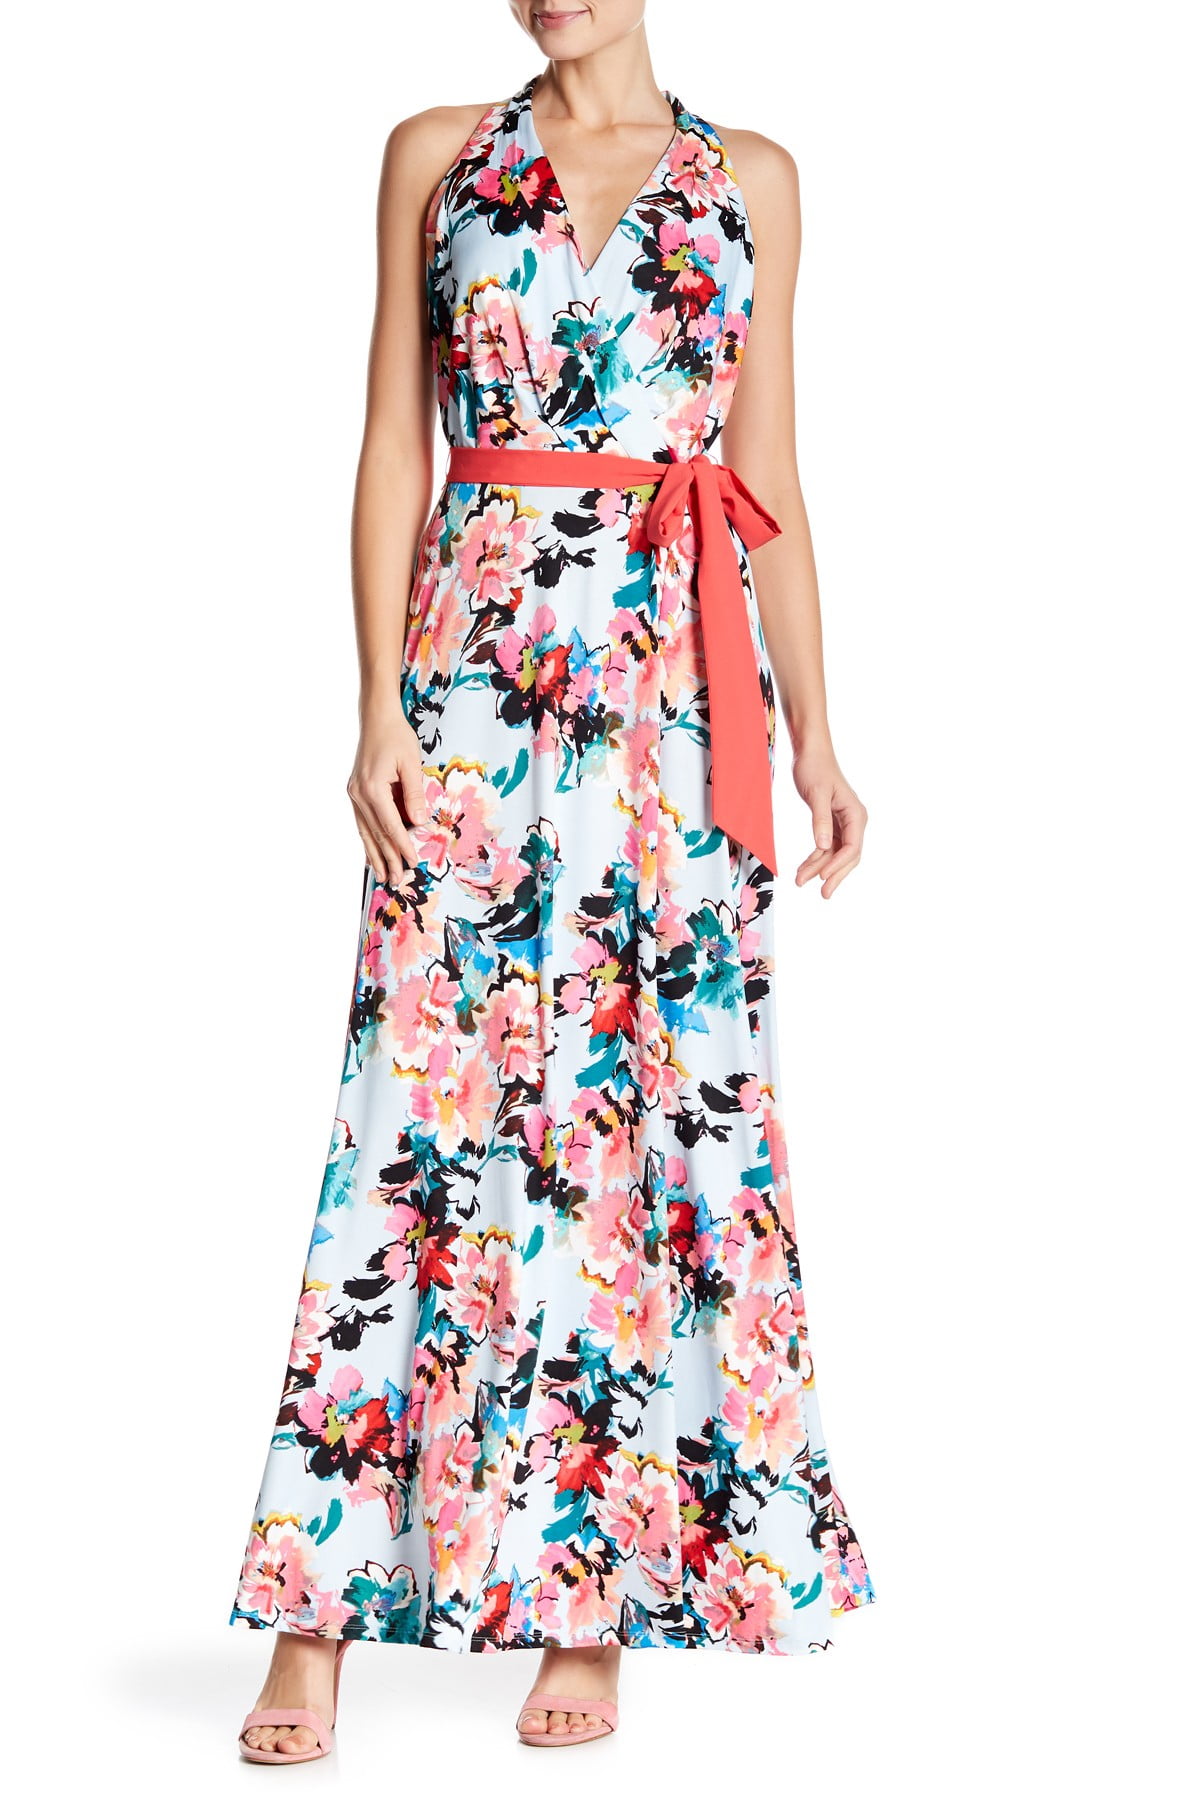 Chetta B - Women's Surplice Neck Floral Maxi Dress 10 - Walmart.com ...